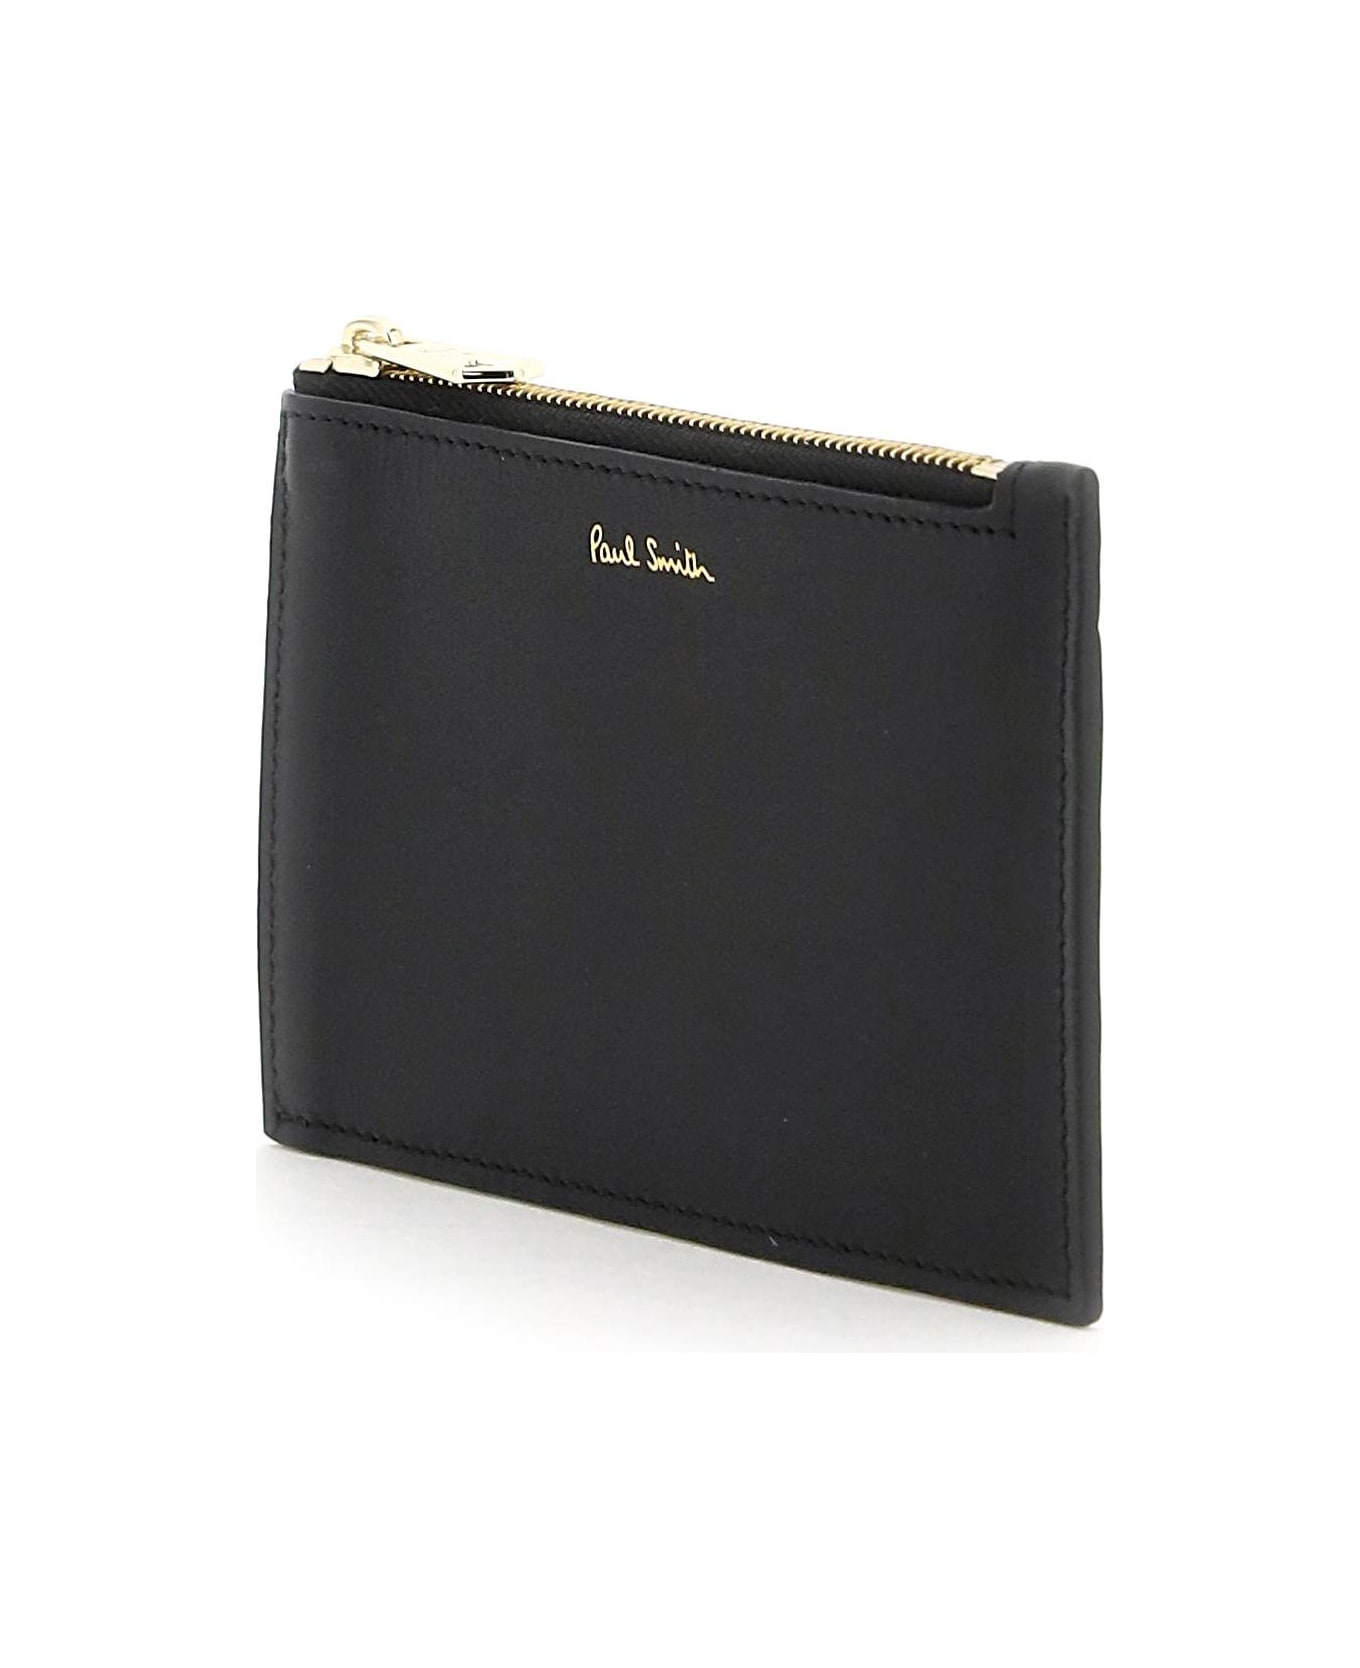 Paul Smith Signature Stripe Leather Card Holder - BLACK 財布